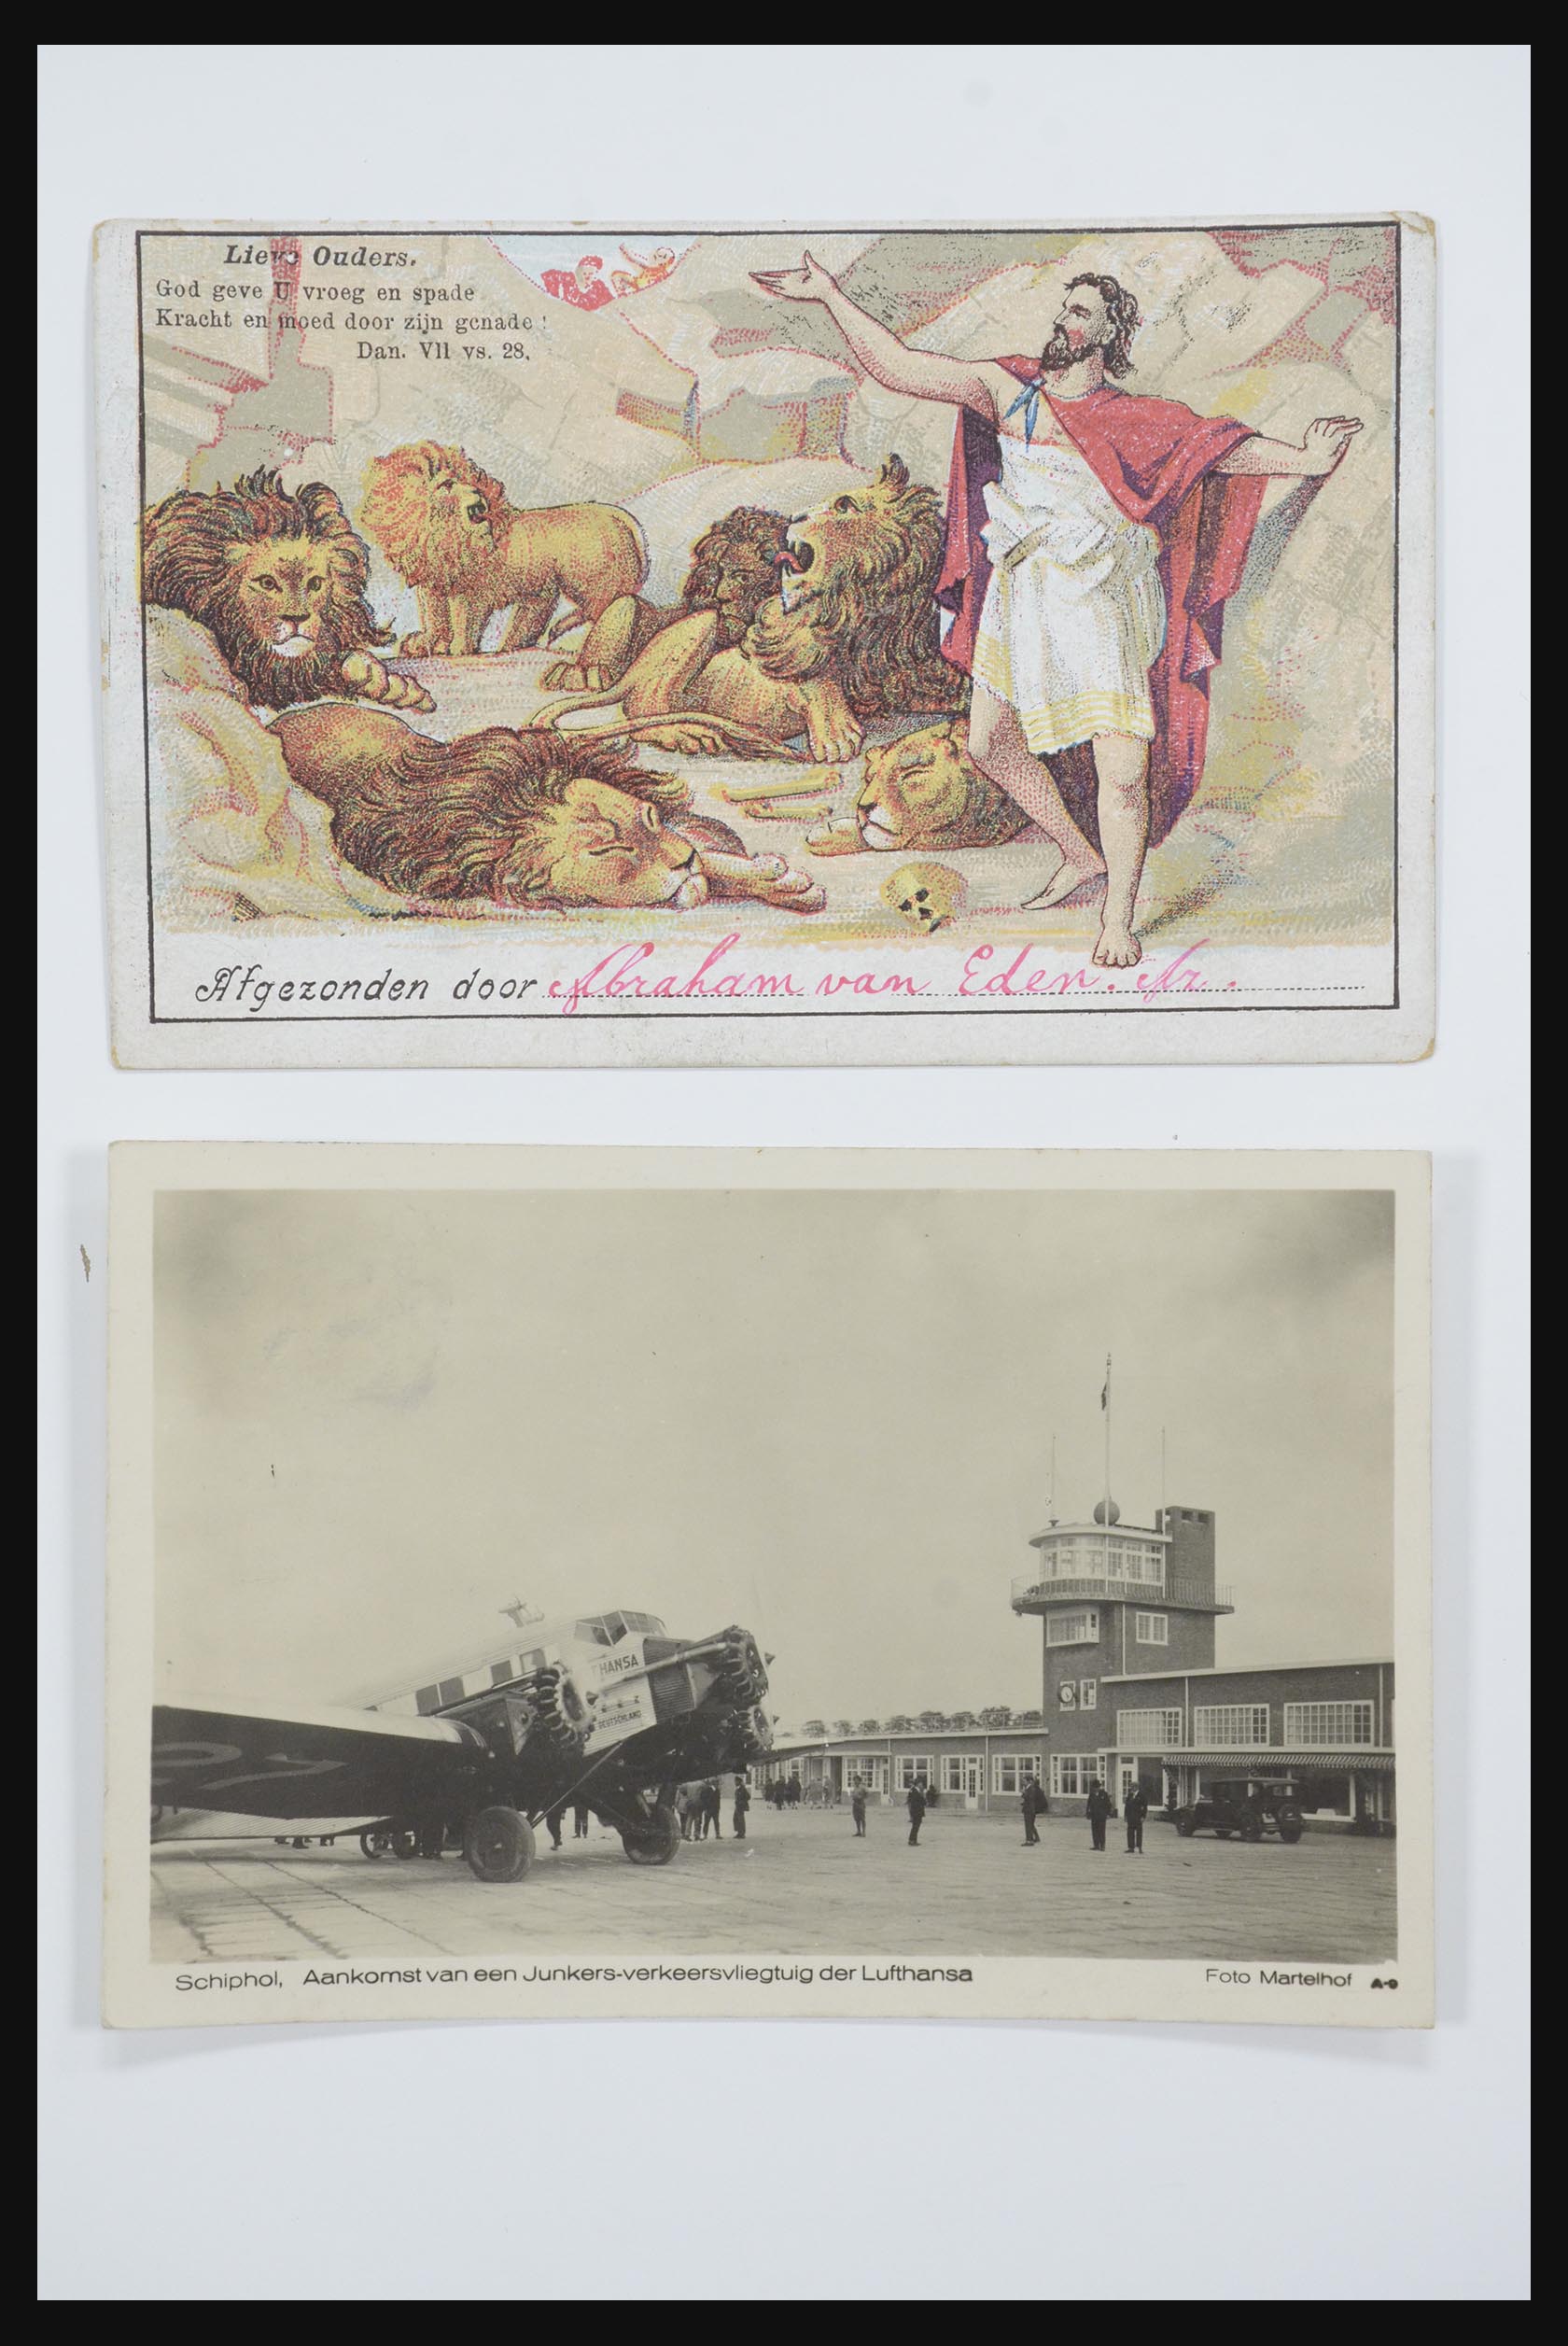 31668 044 - 31668 Netherlands picture postcards 1905-1935.